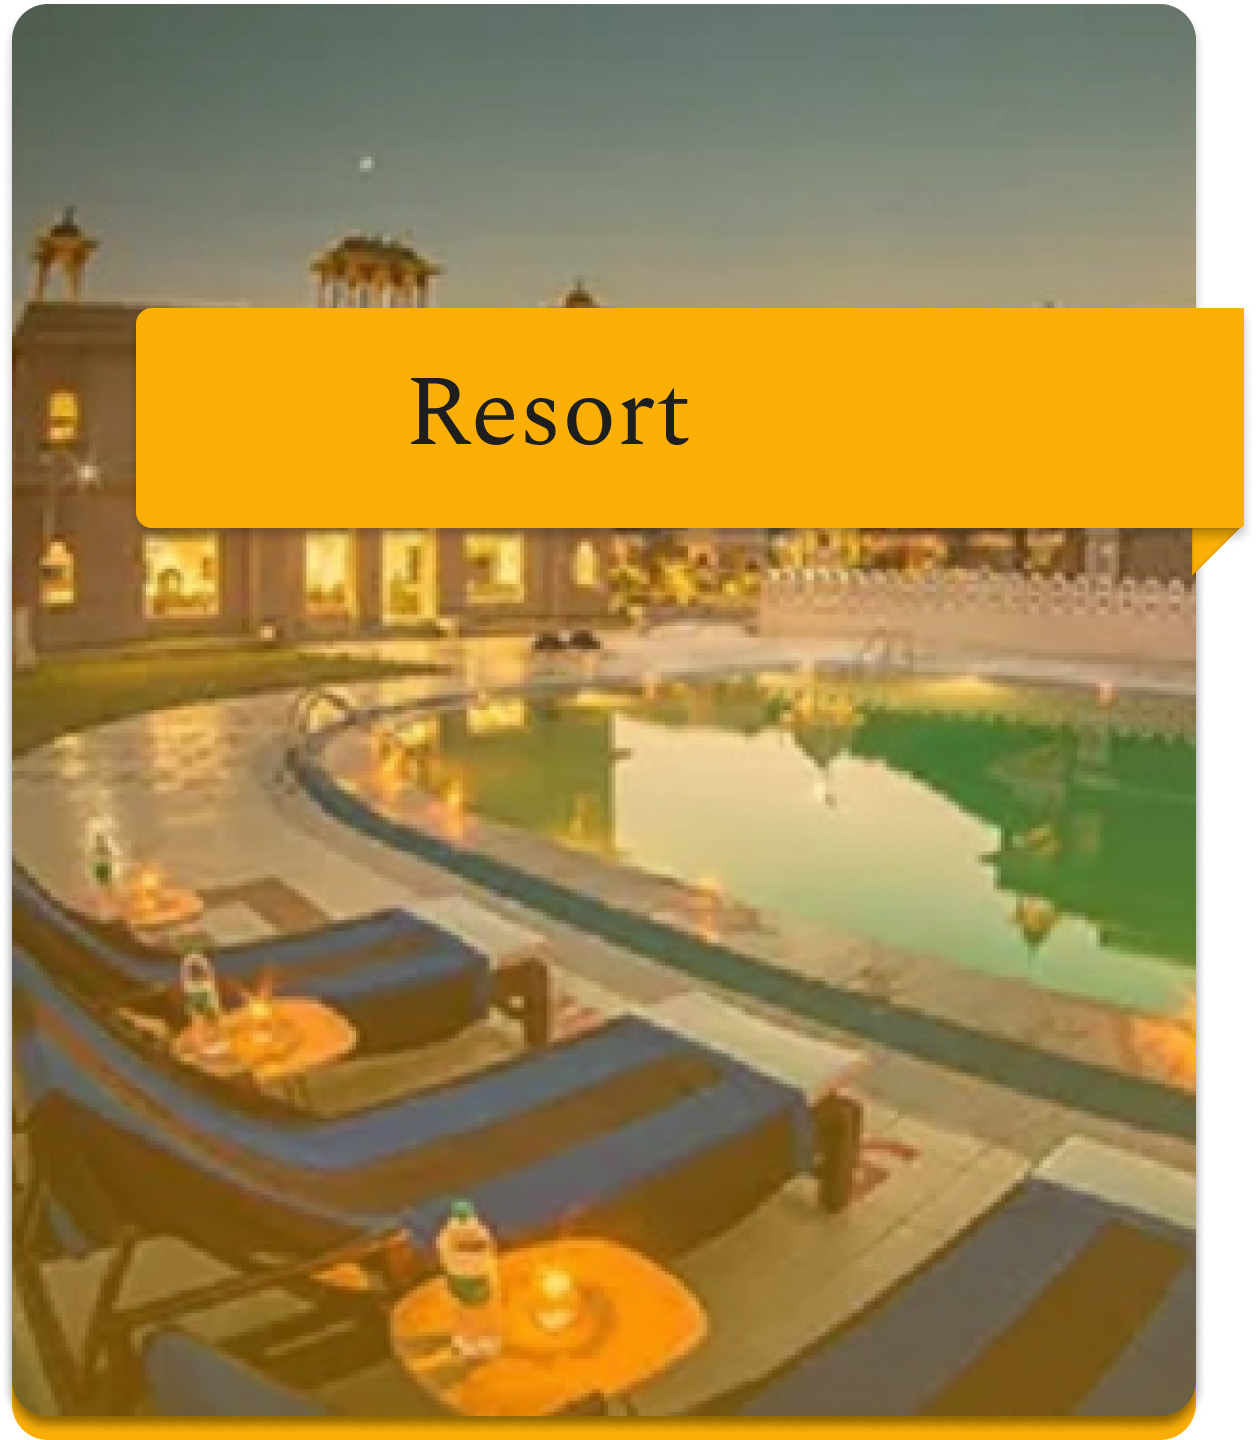 jaisalmer-hotel